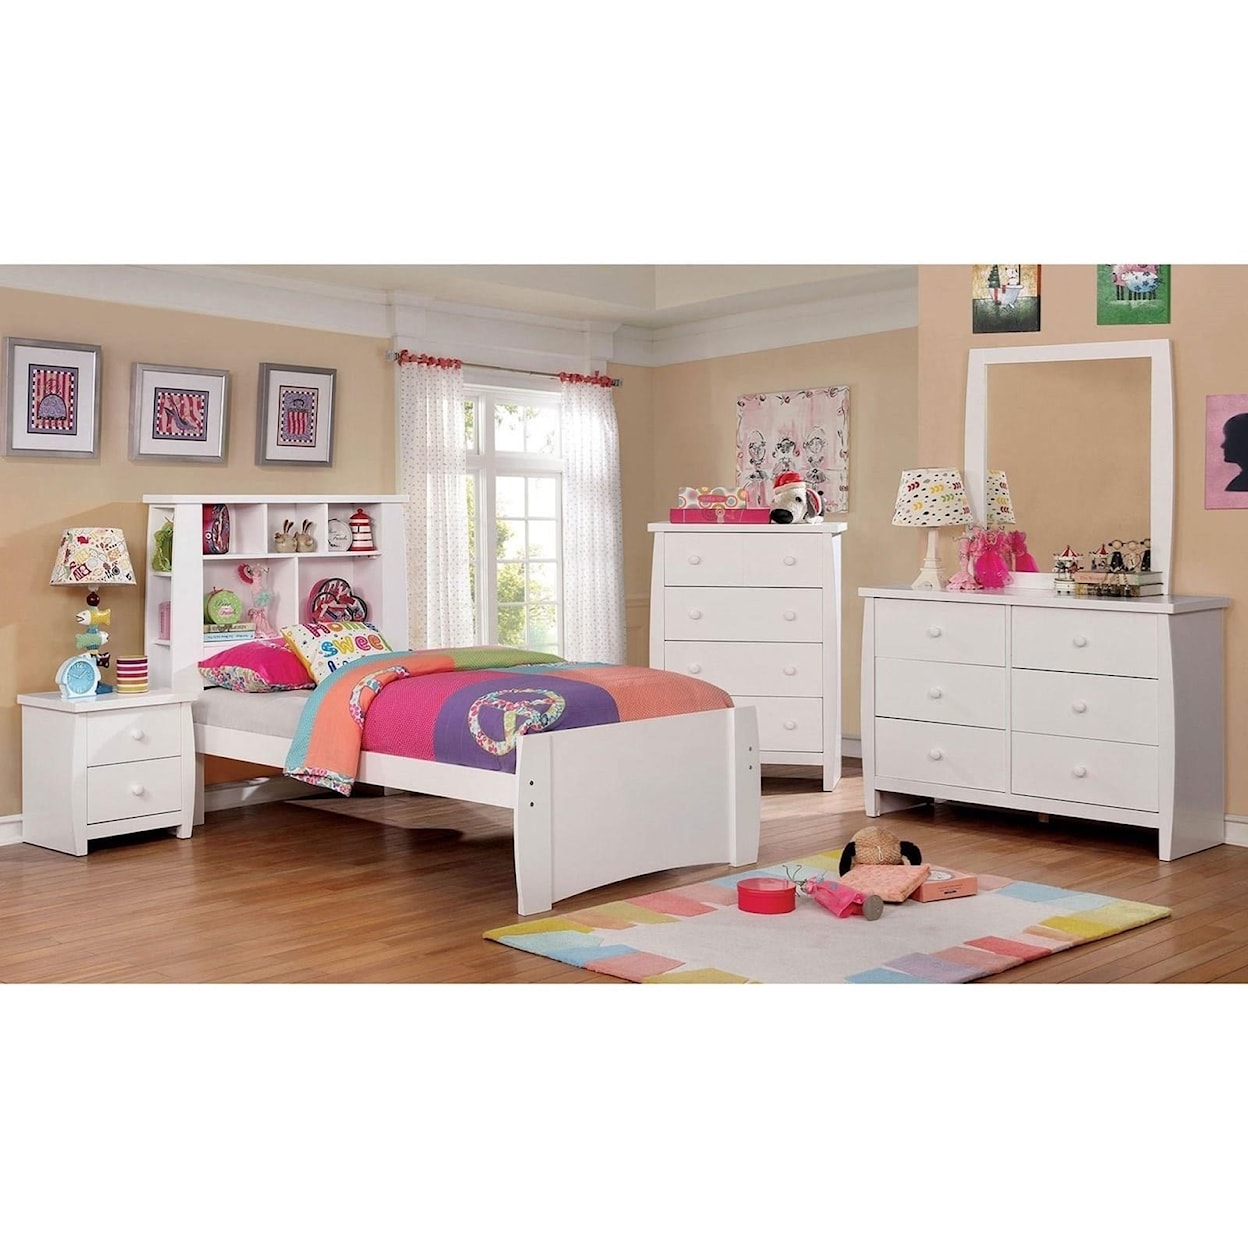 Furniture of America Marlee 4 Pc. Twin Bedroom Set